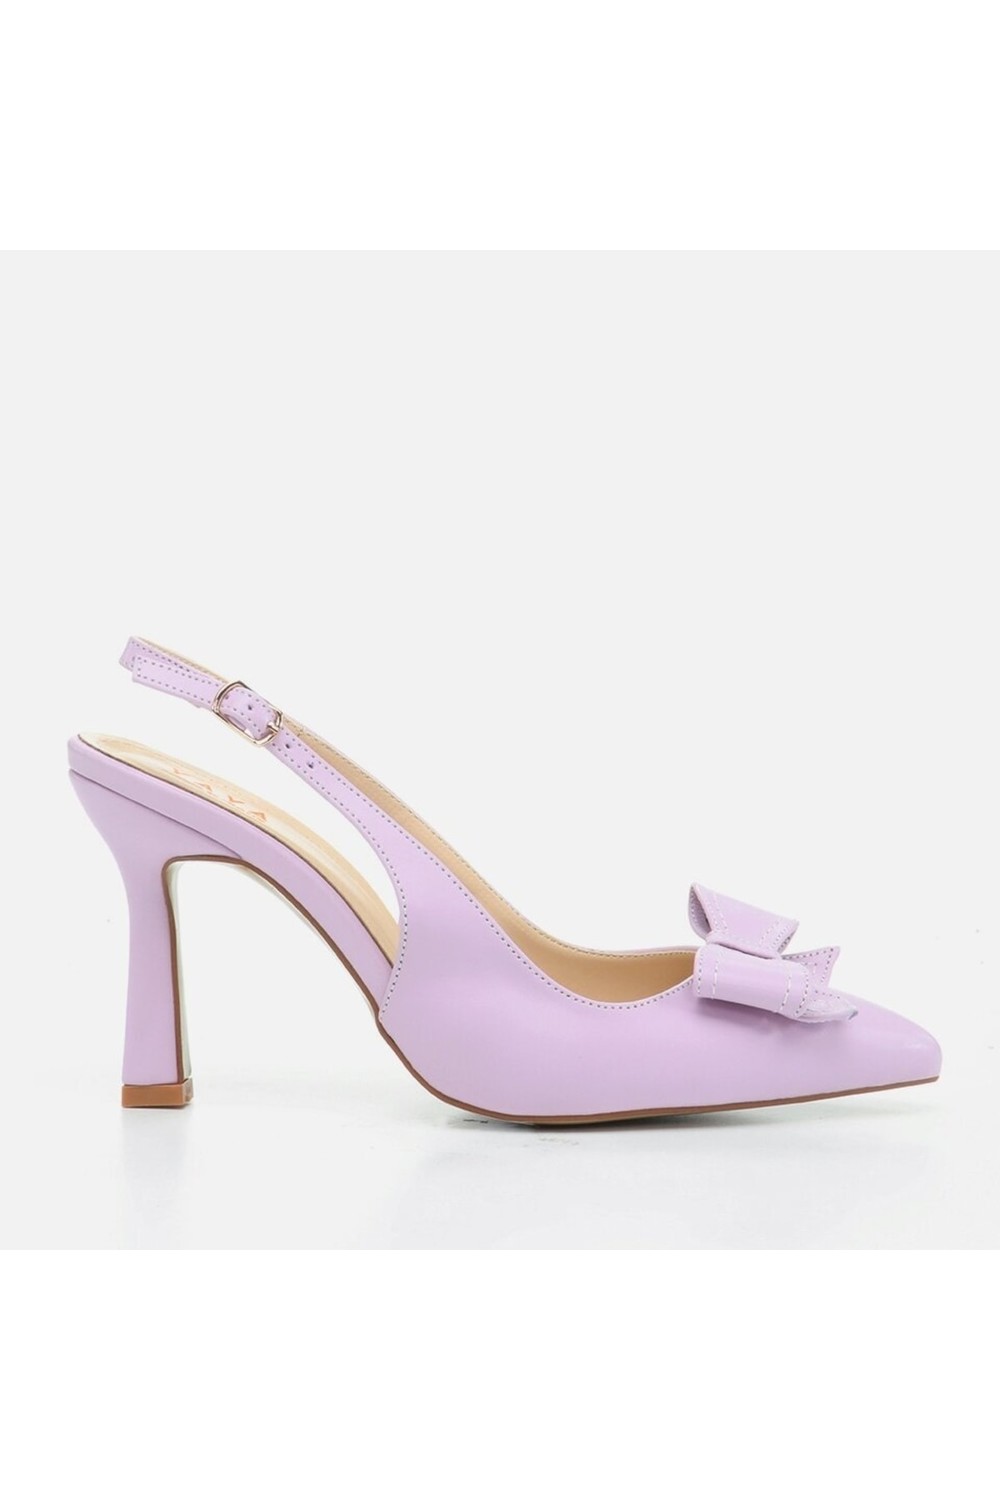 Yaya by Hotiç High Heels - Purple - Stiletto Heels